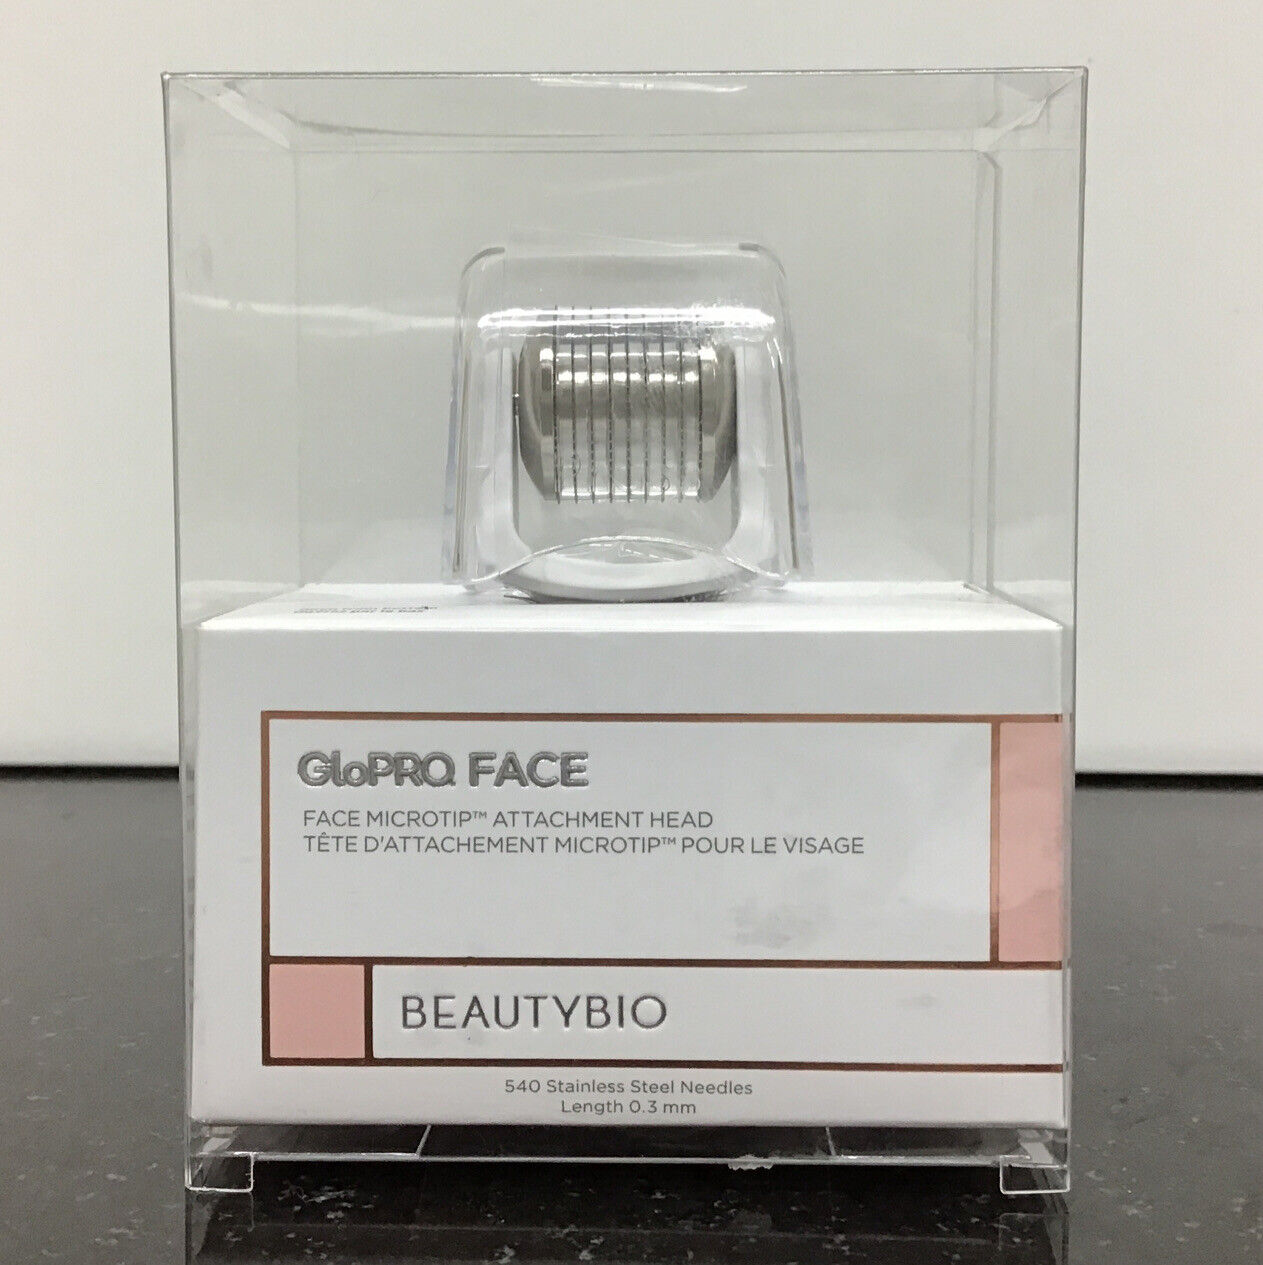 Beauty Bio | GloPRO FACE | Face MICROTIP ATTACHEMEN HEAD | ¡As pictured